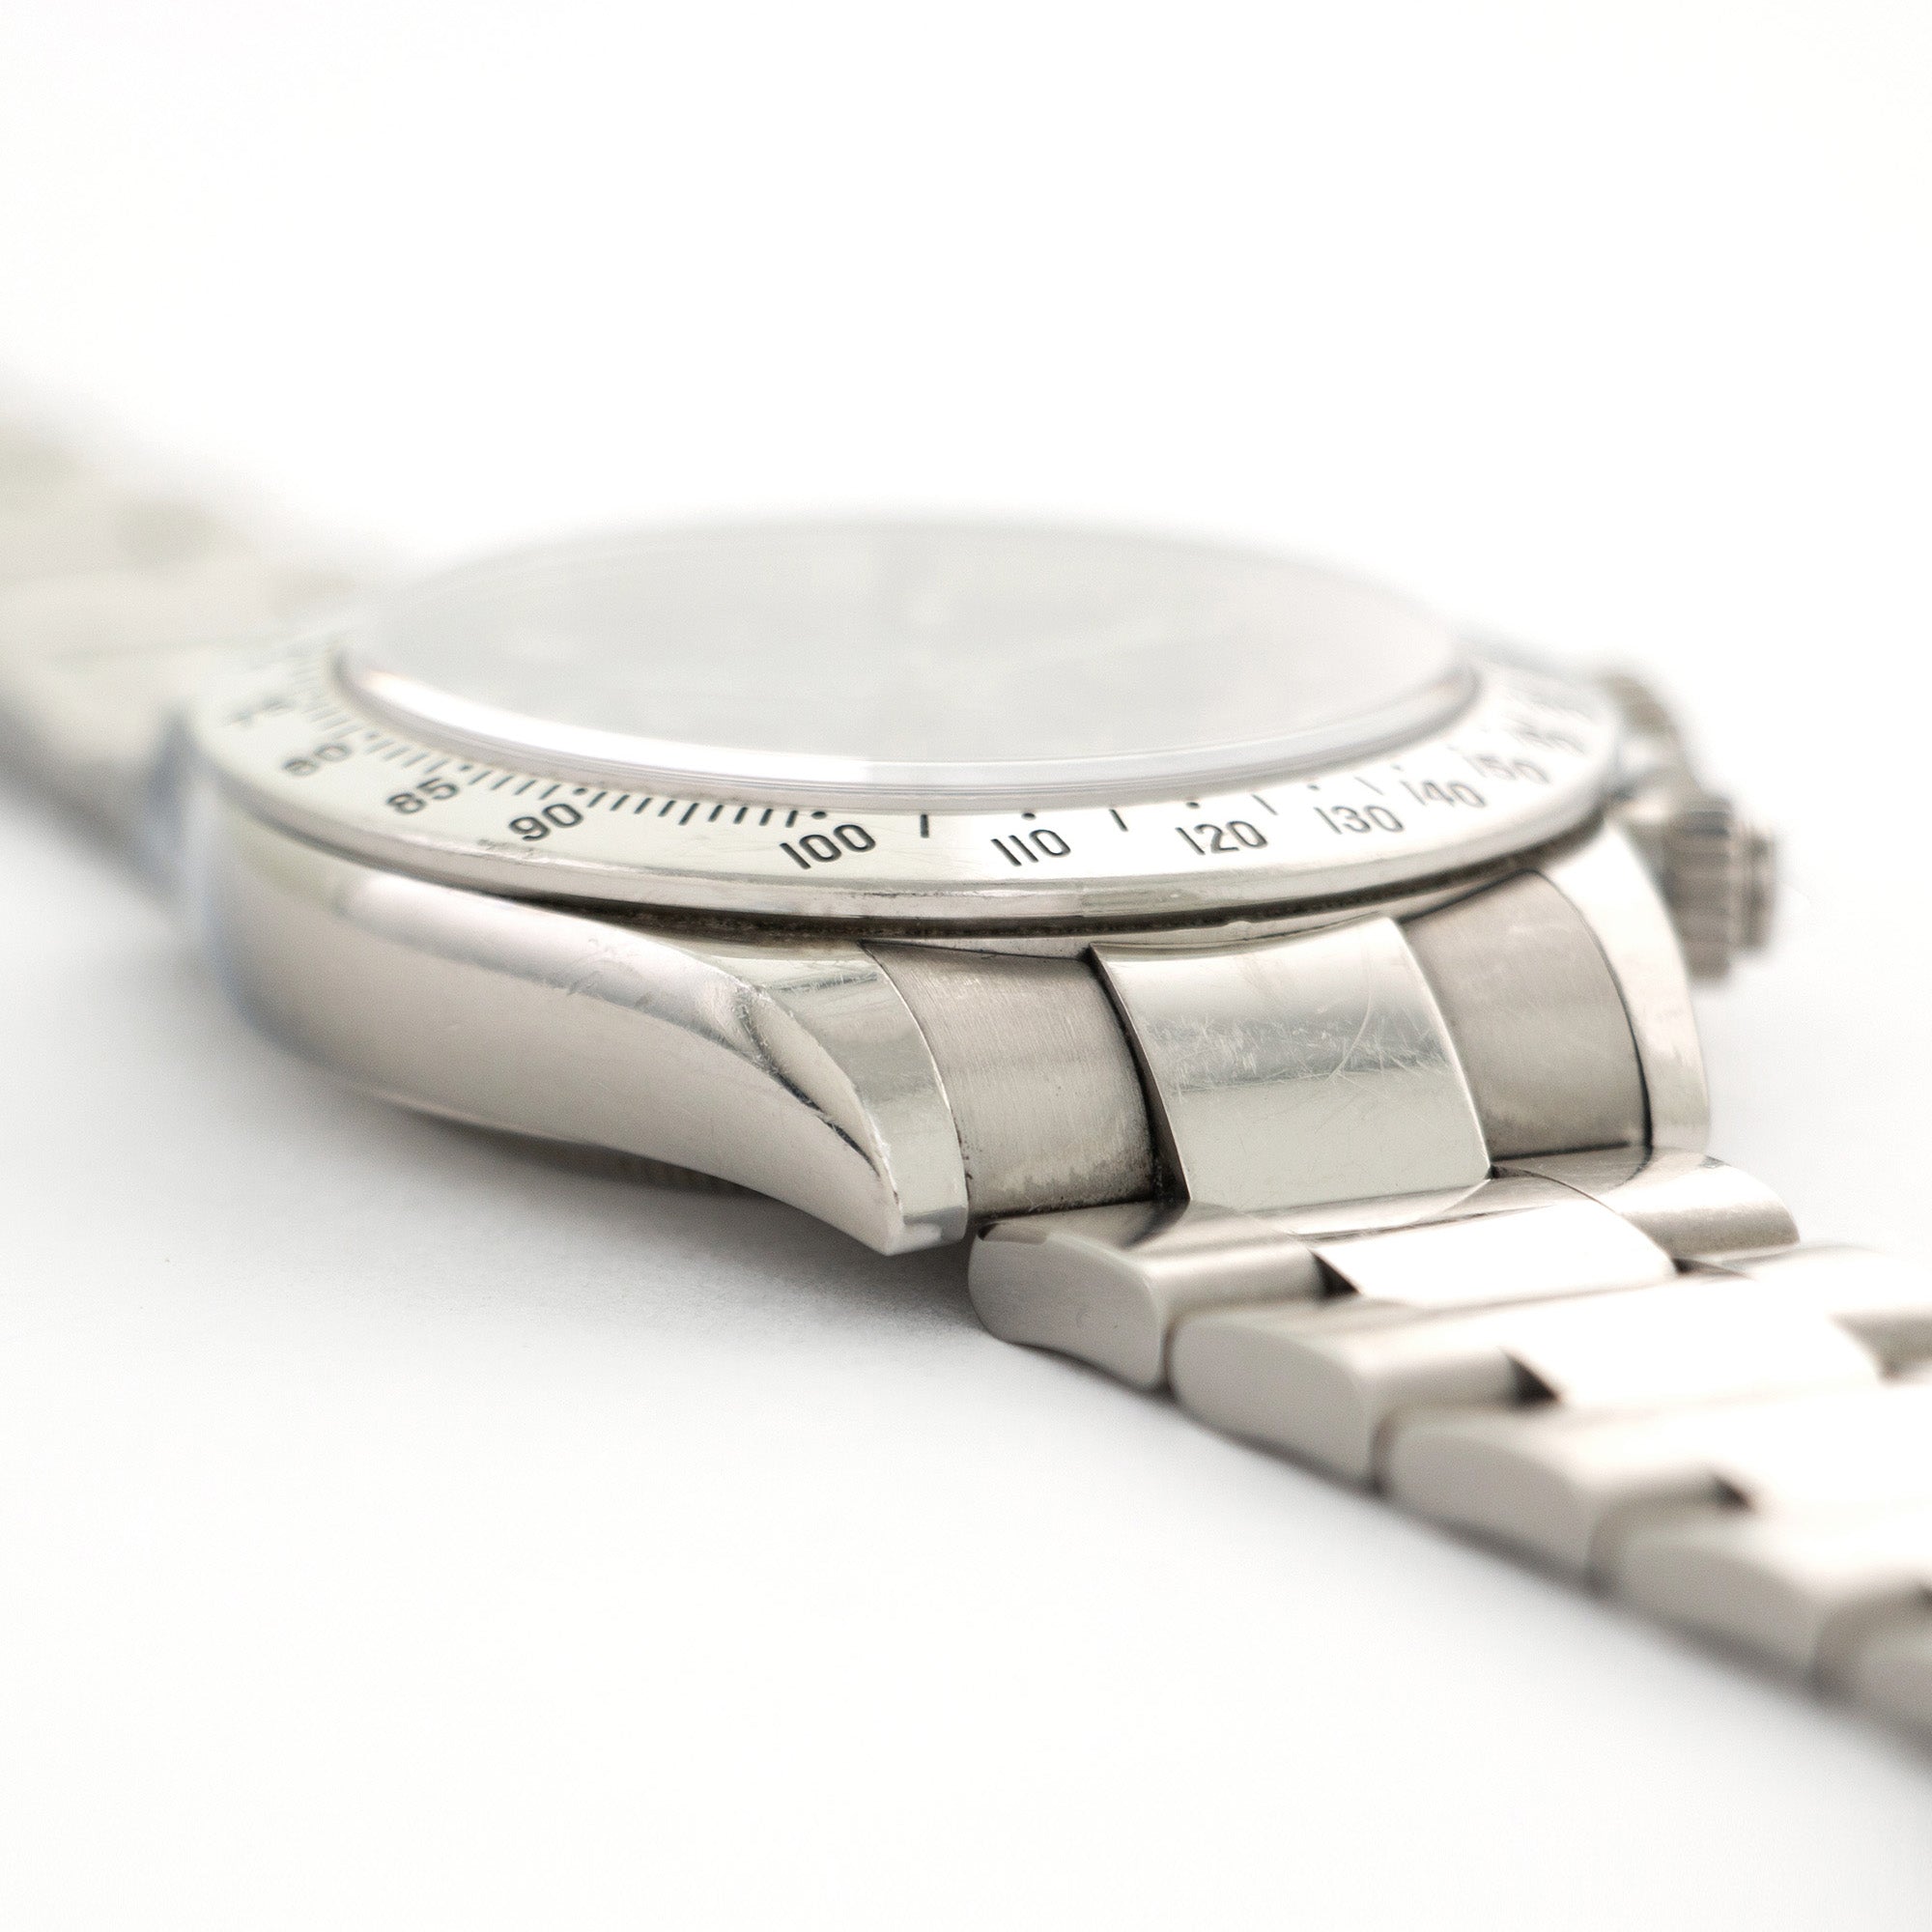 Rolex - Rolex Cosmograph Daytona Watch Ref. 116520 - The Keystone Watches